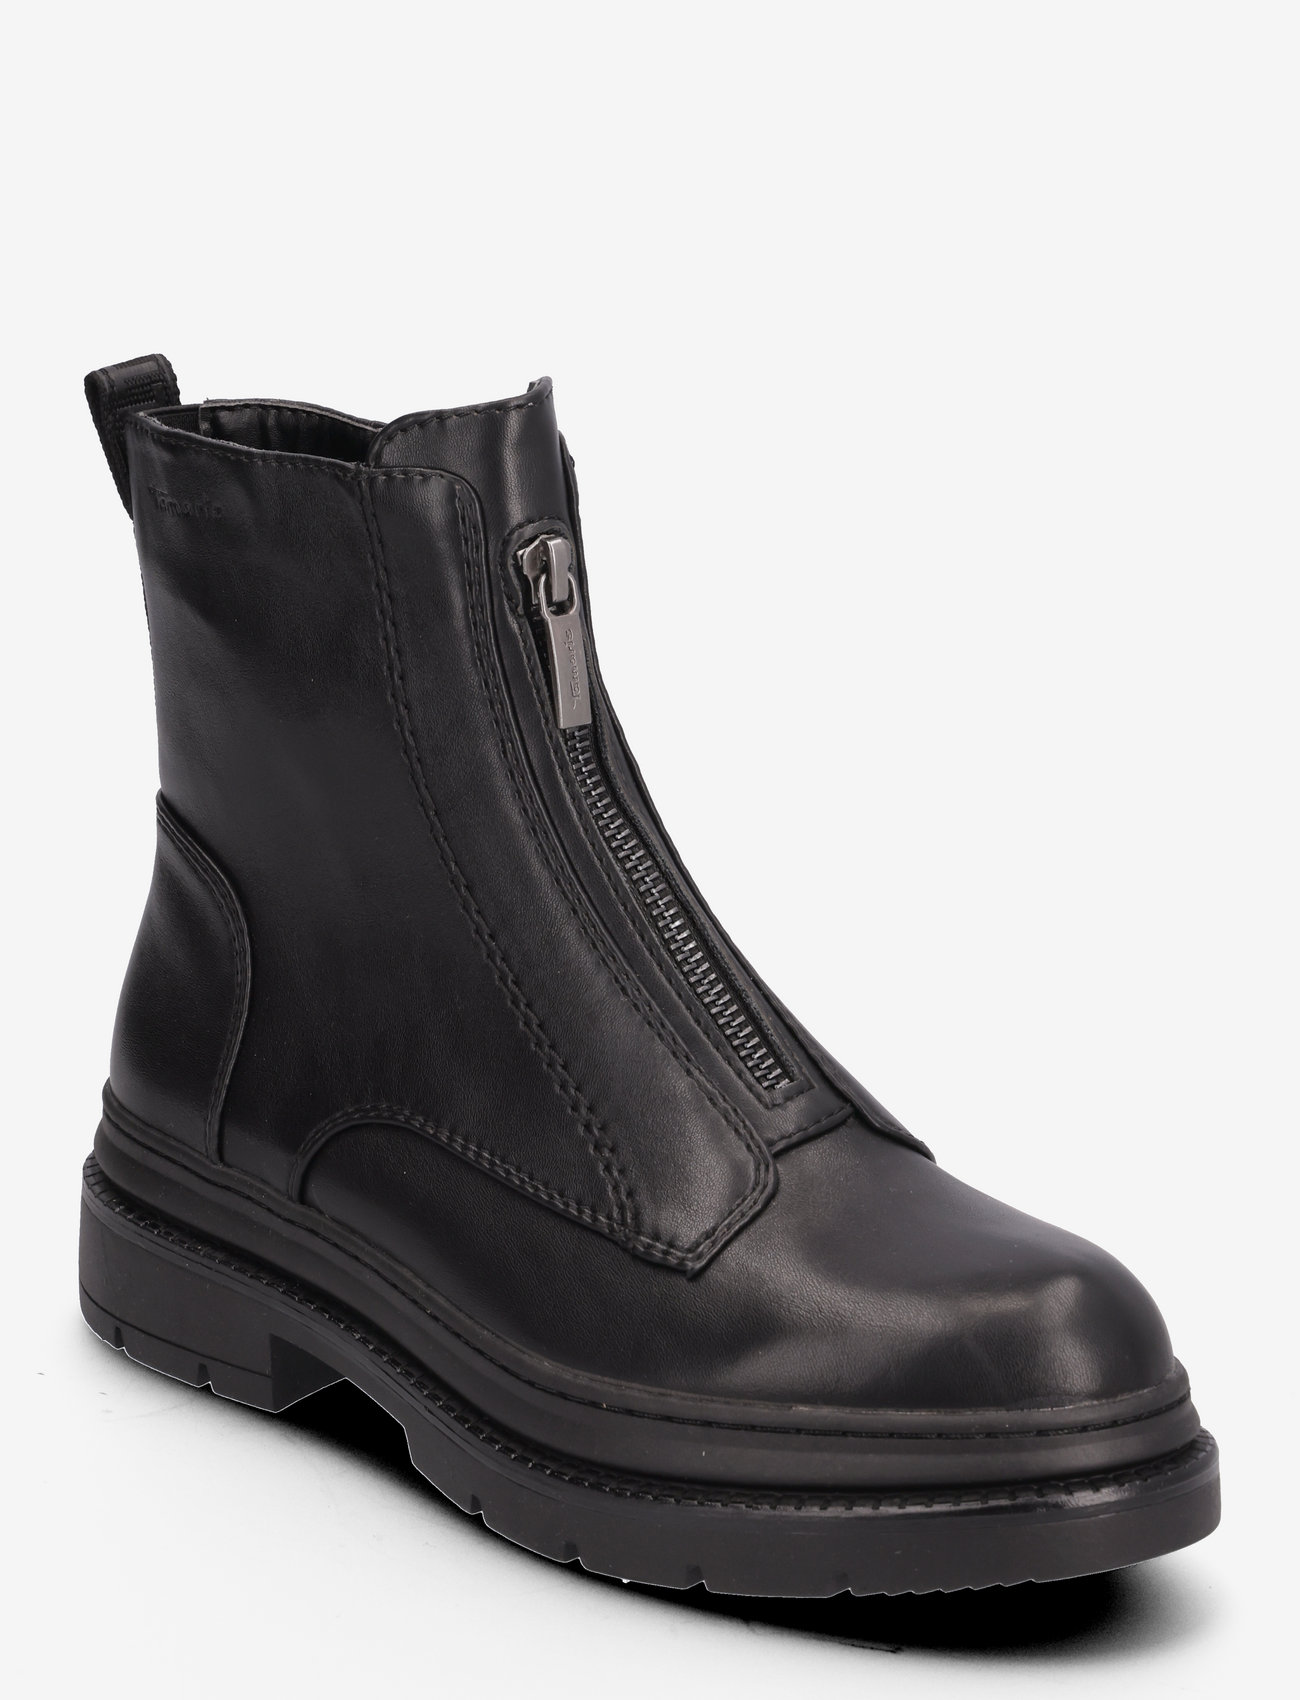 Tamaris - Women Boots - flache stiefeletten - black - 0